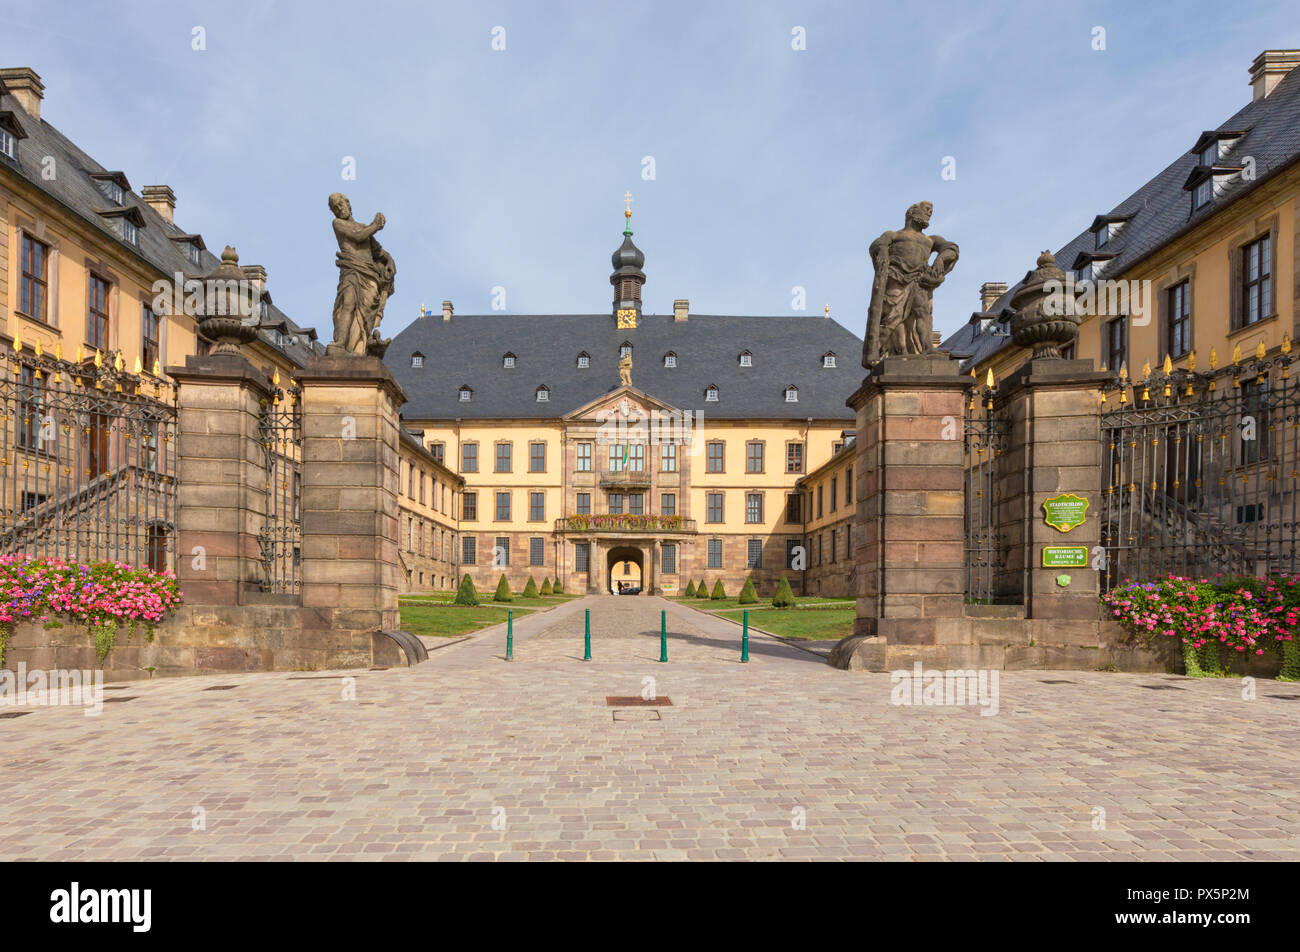 Stadtschloss palace at Fulda, Hesse, Germany Stock Photo